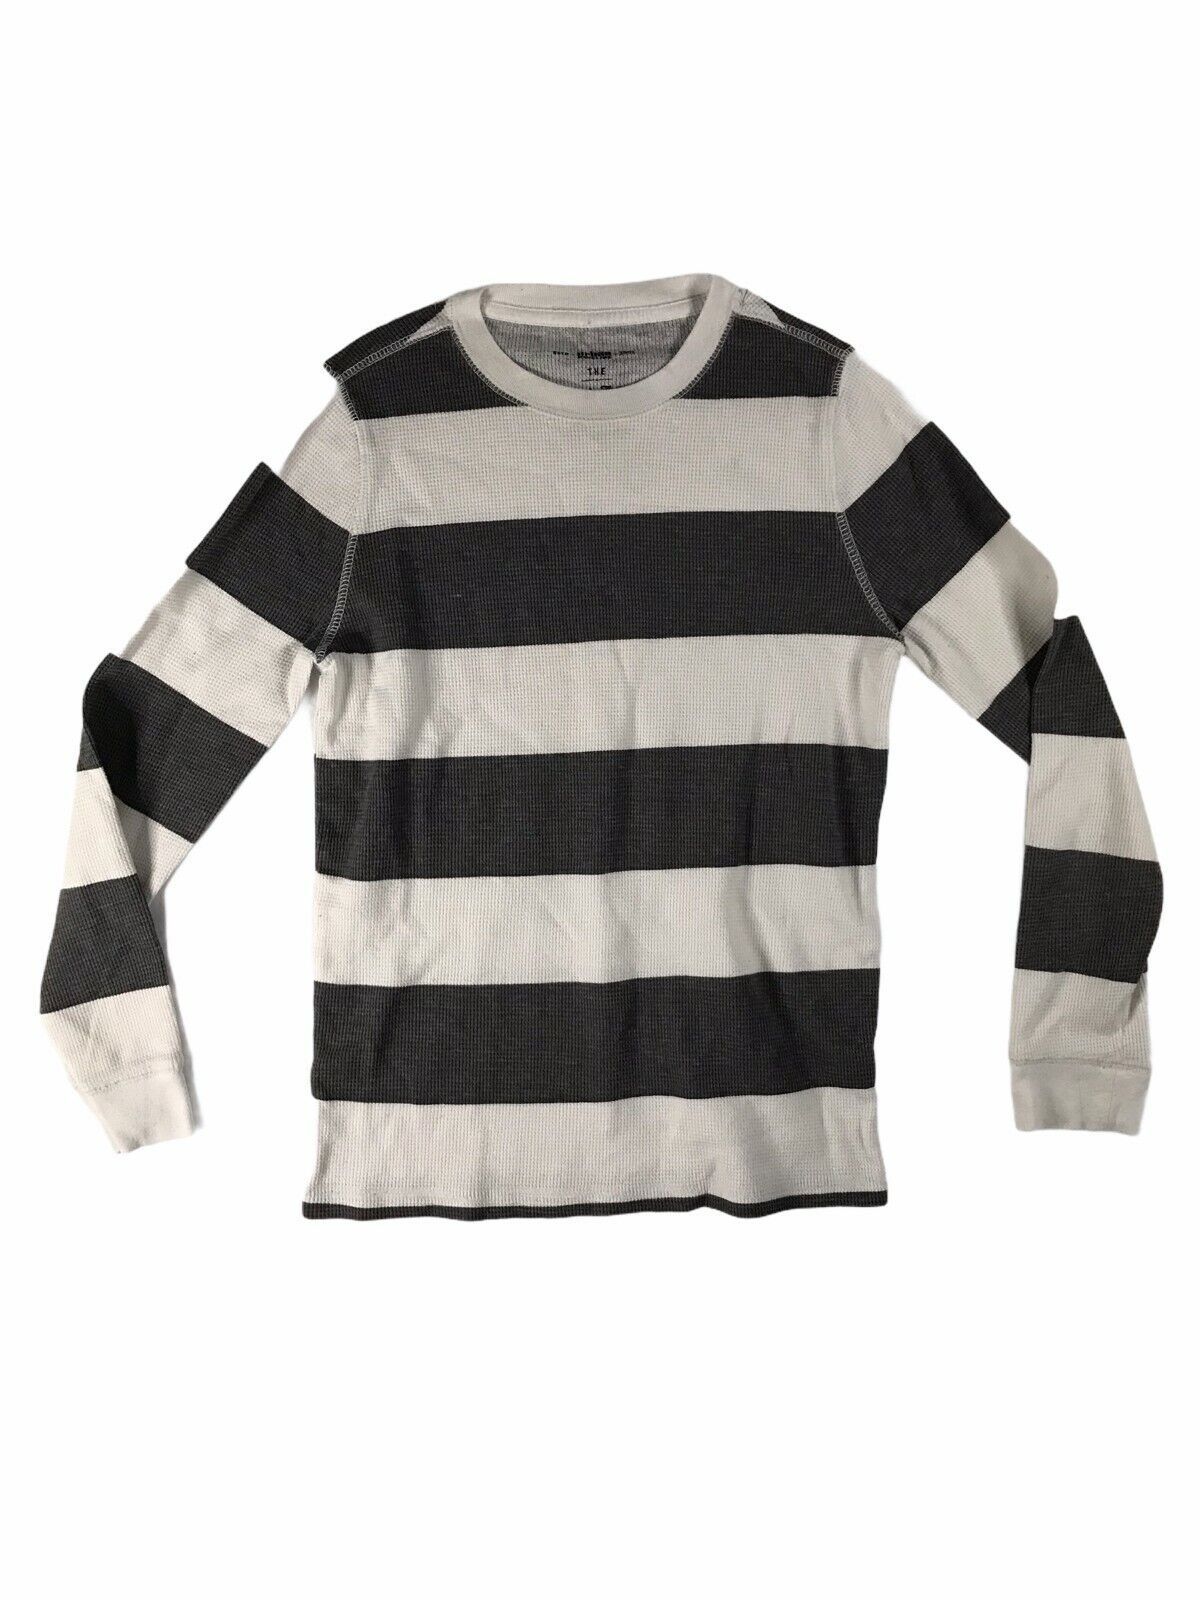 Urban Pipeline Long Sleeve T-Shirt - White/Gray Stripes - Unisex Kid's Size M - $8.14